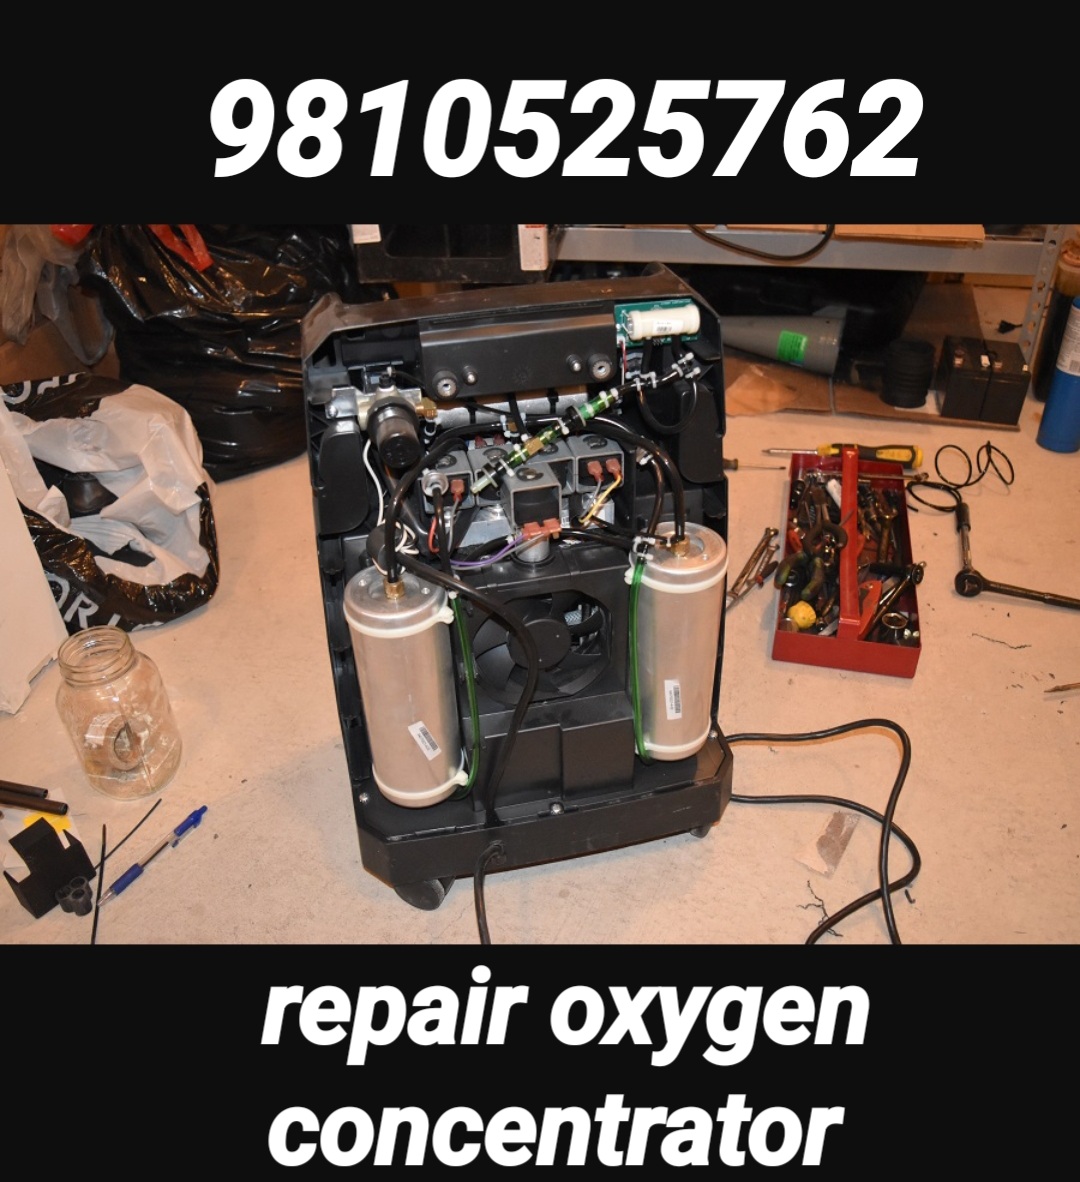 Oxygen Concentrator Machine Repair Near Me 9810525762